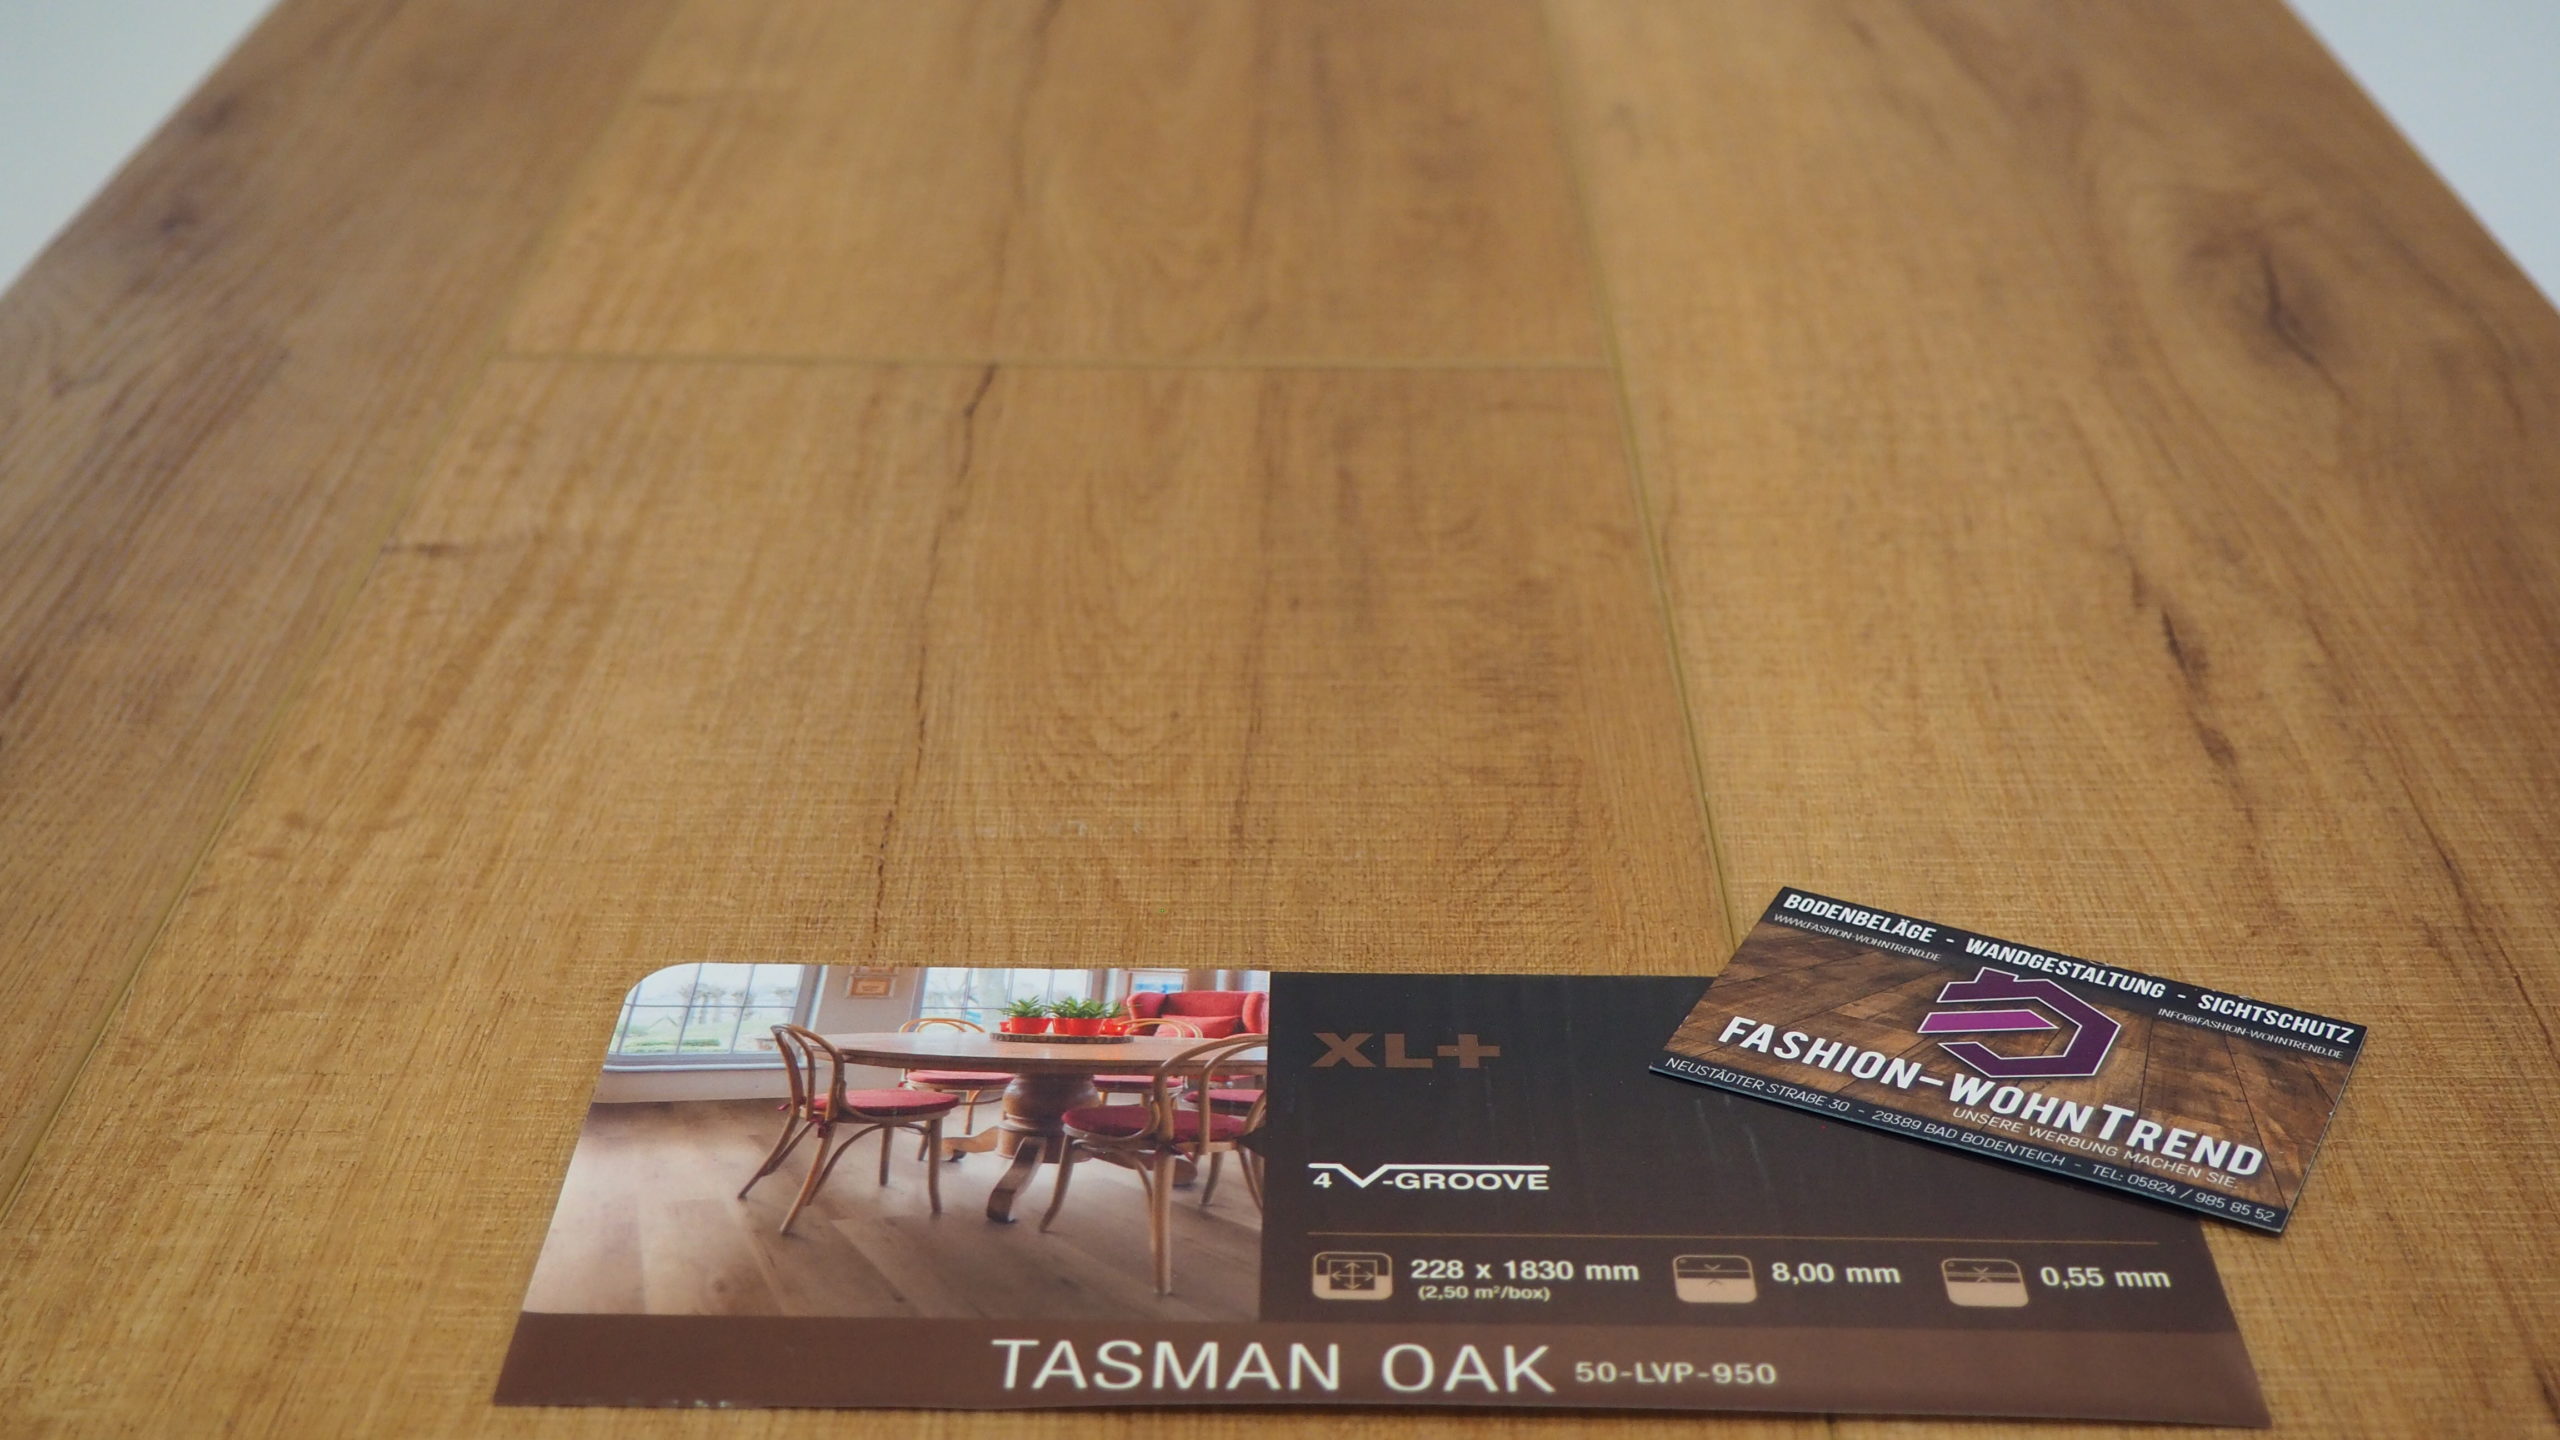 CoreTec Erfahrung Tasman Oak 50-LVPE-950